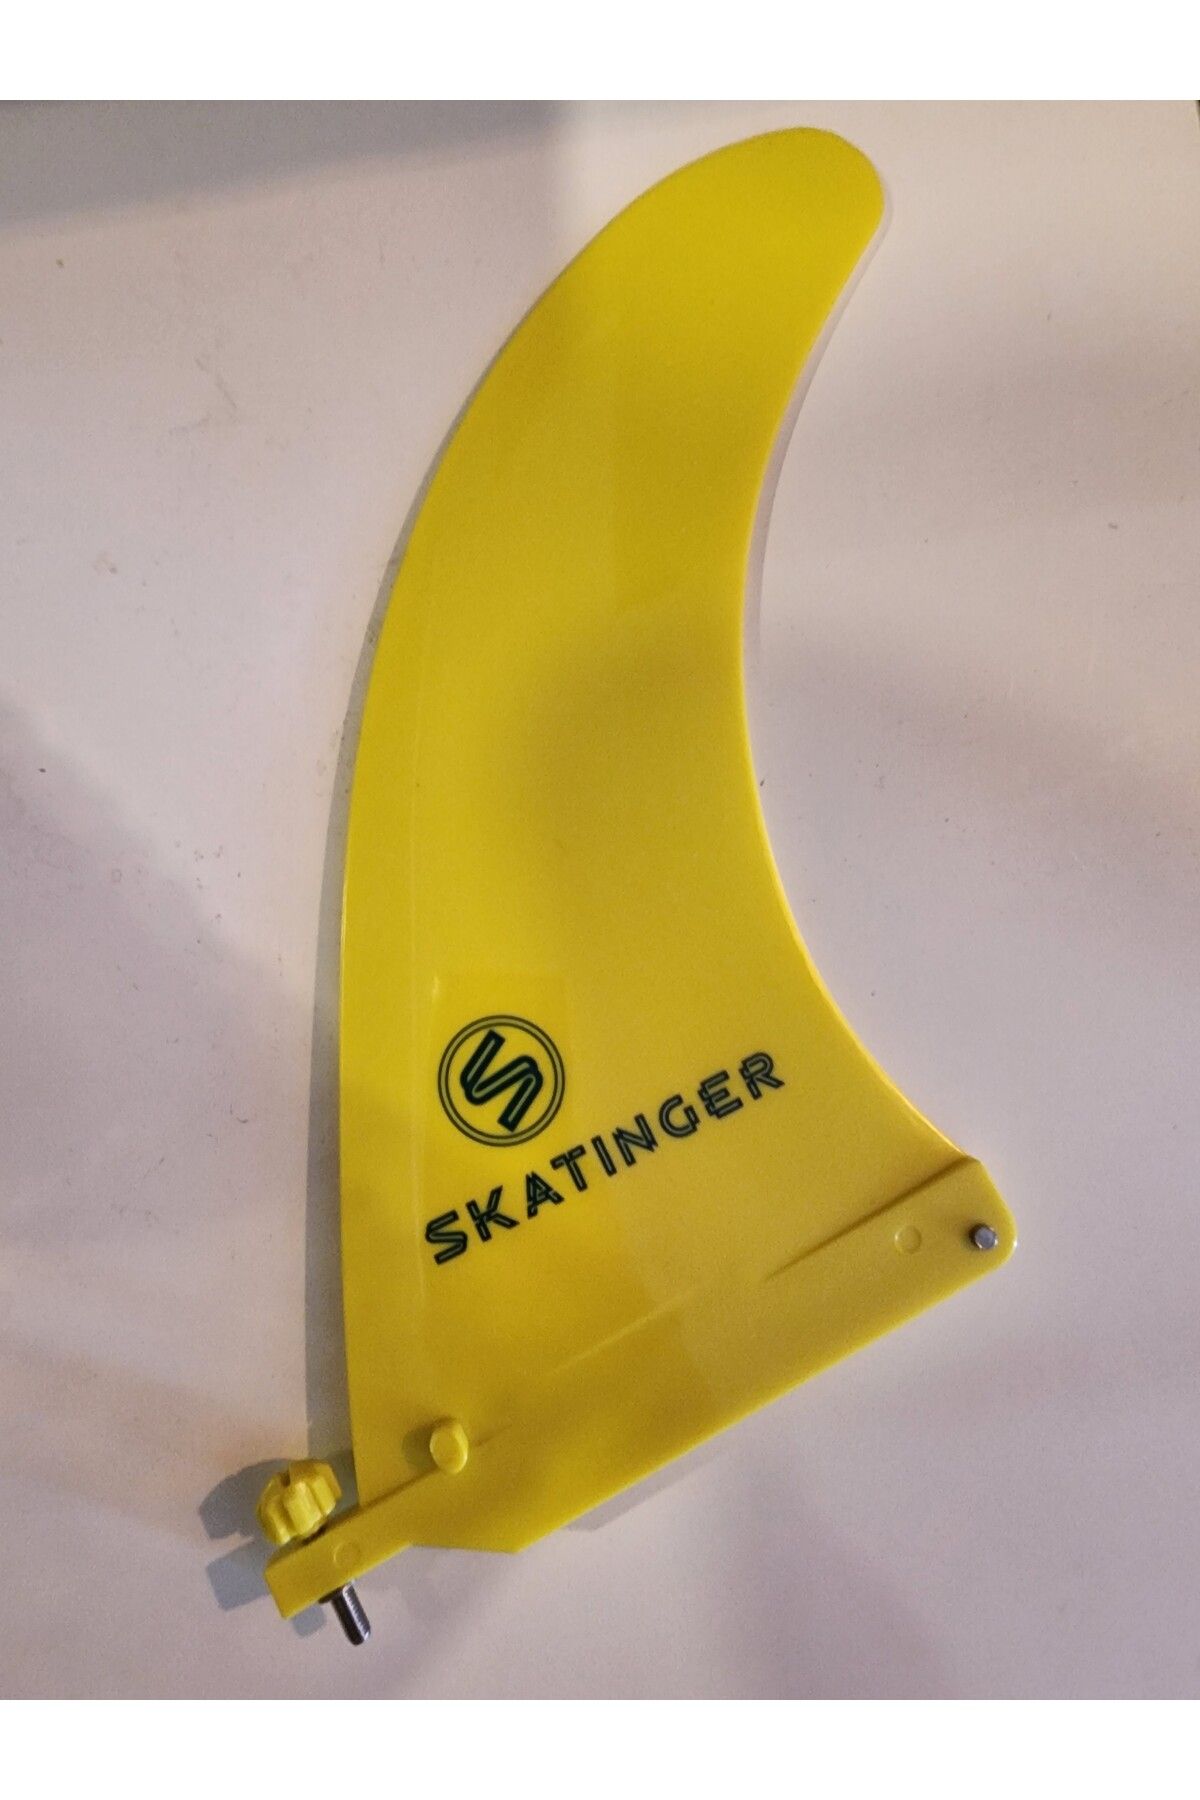 Skatinger Sup Paddle Board Salma - Fin Vidalı Skatinger şişirilebilir sörf tahtası renkli salma - fin